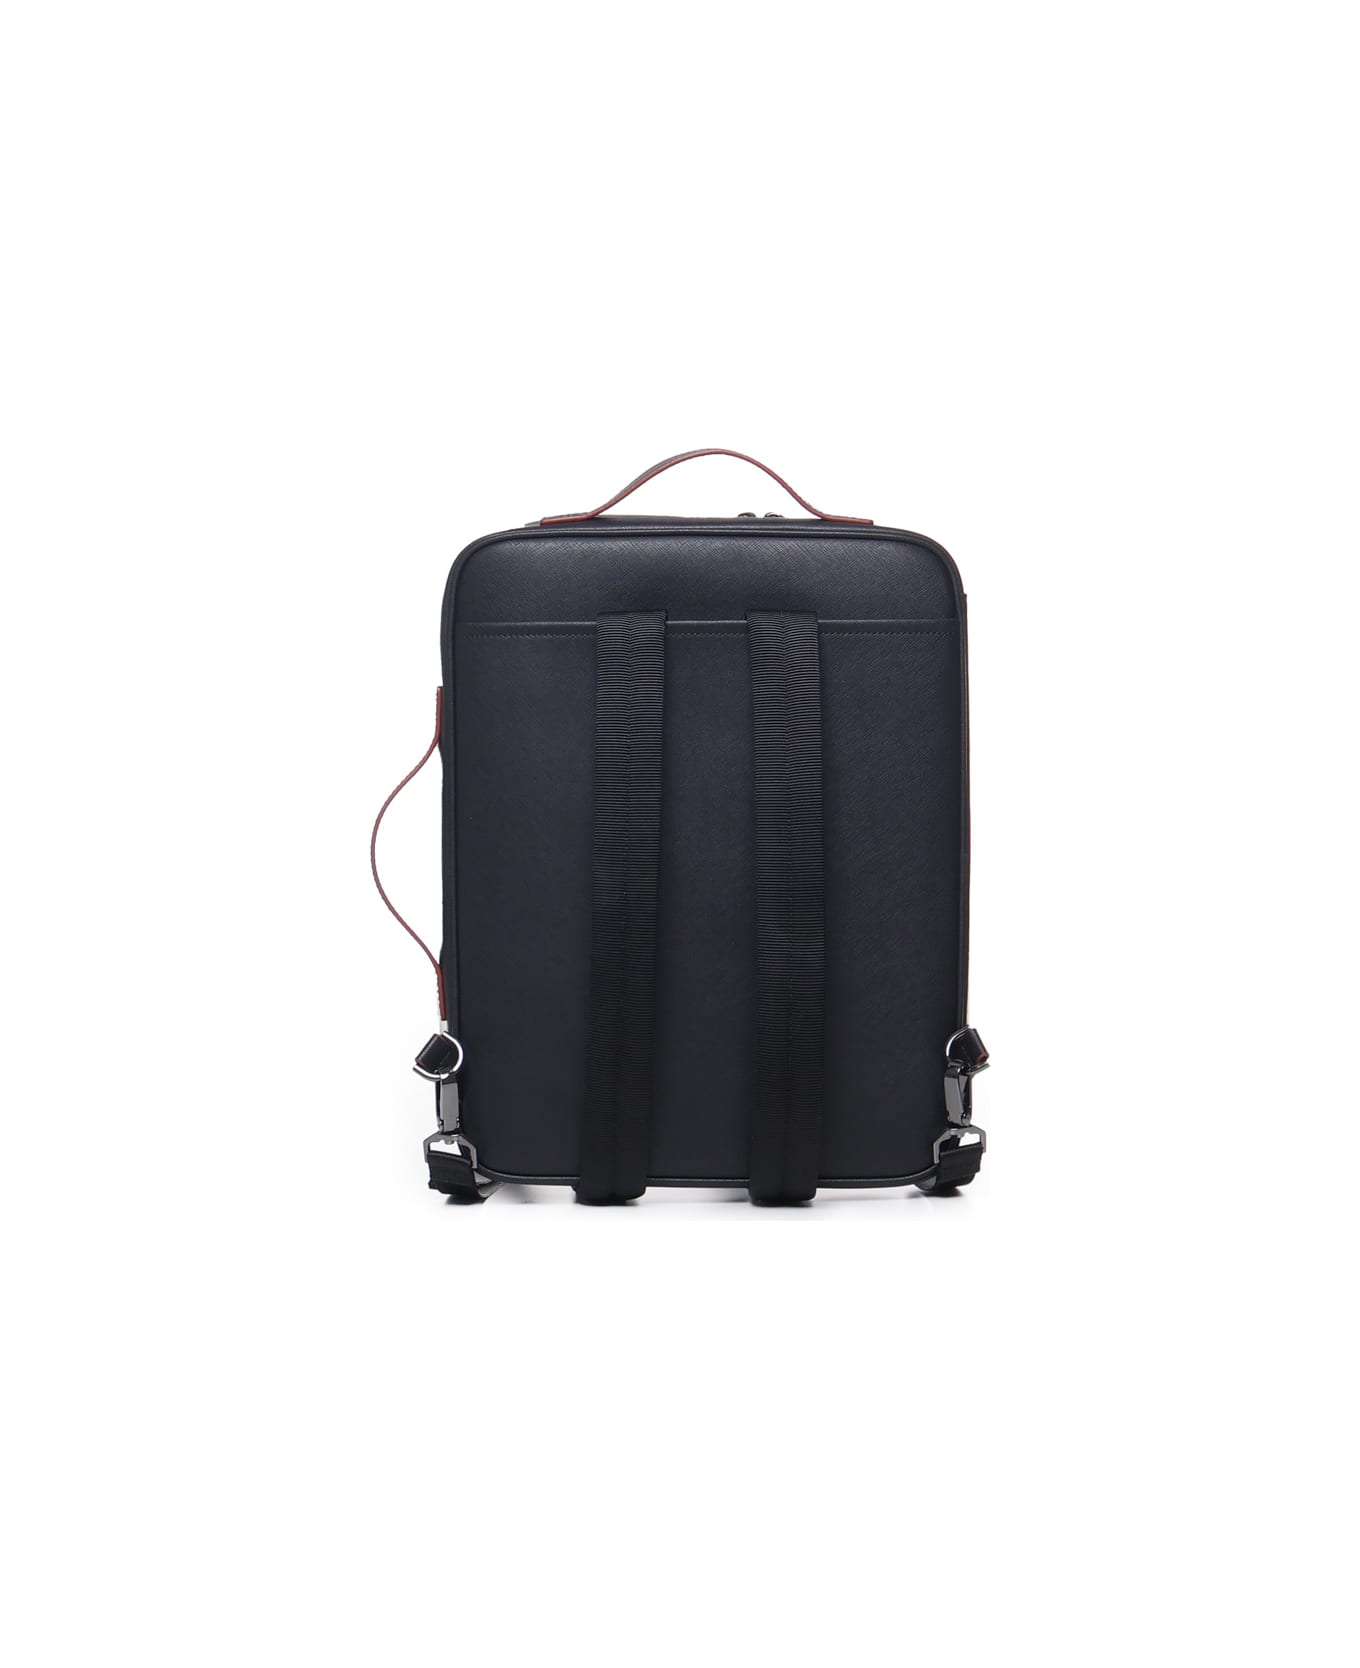 Giorgio Armani Business Bag With Shoulder Straps In Regenerated Saffiano And Recycled Nylon Giorgio Armani バッグ